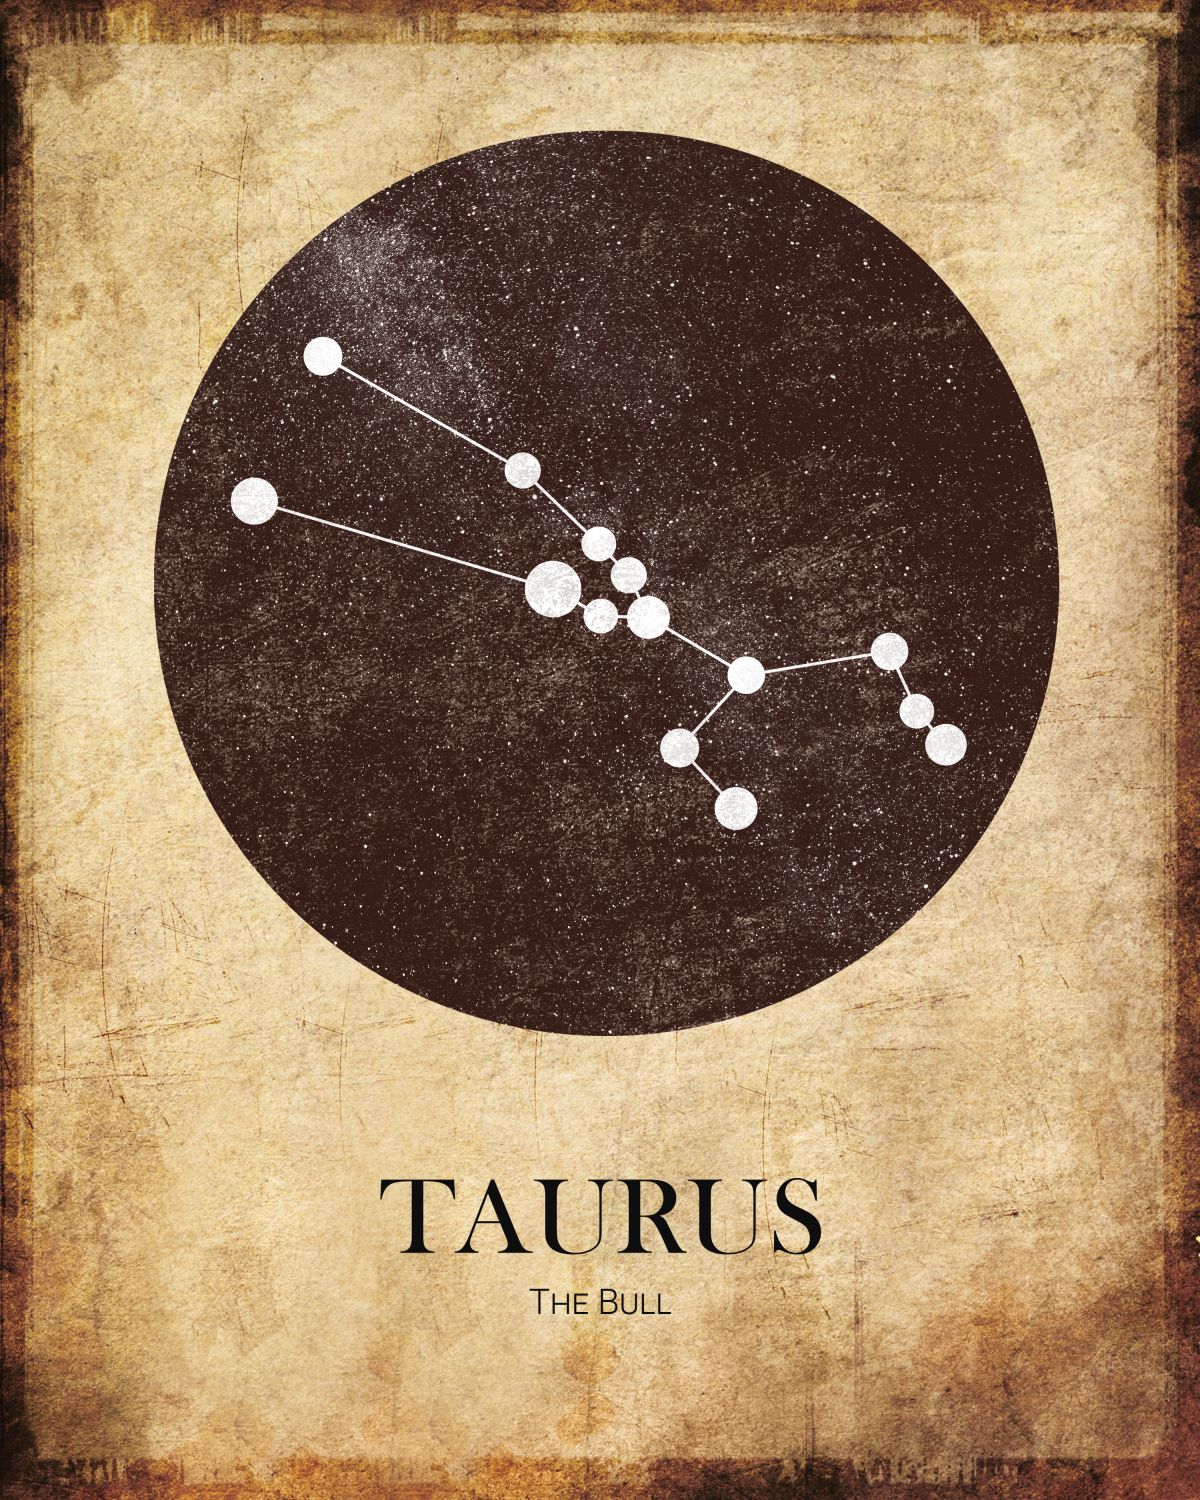 Vintage Taurus Constellation